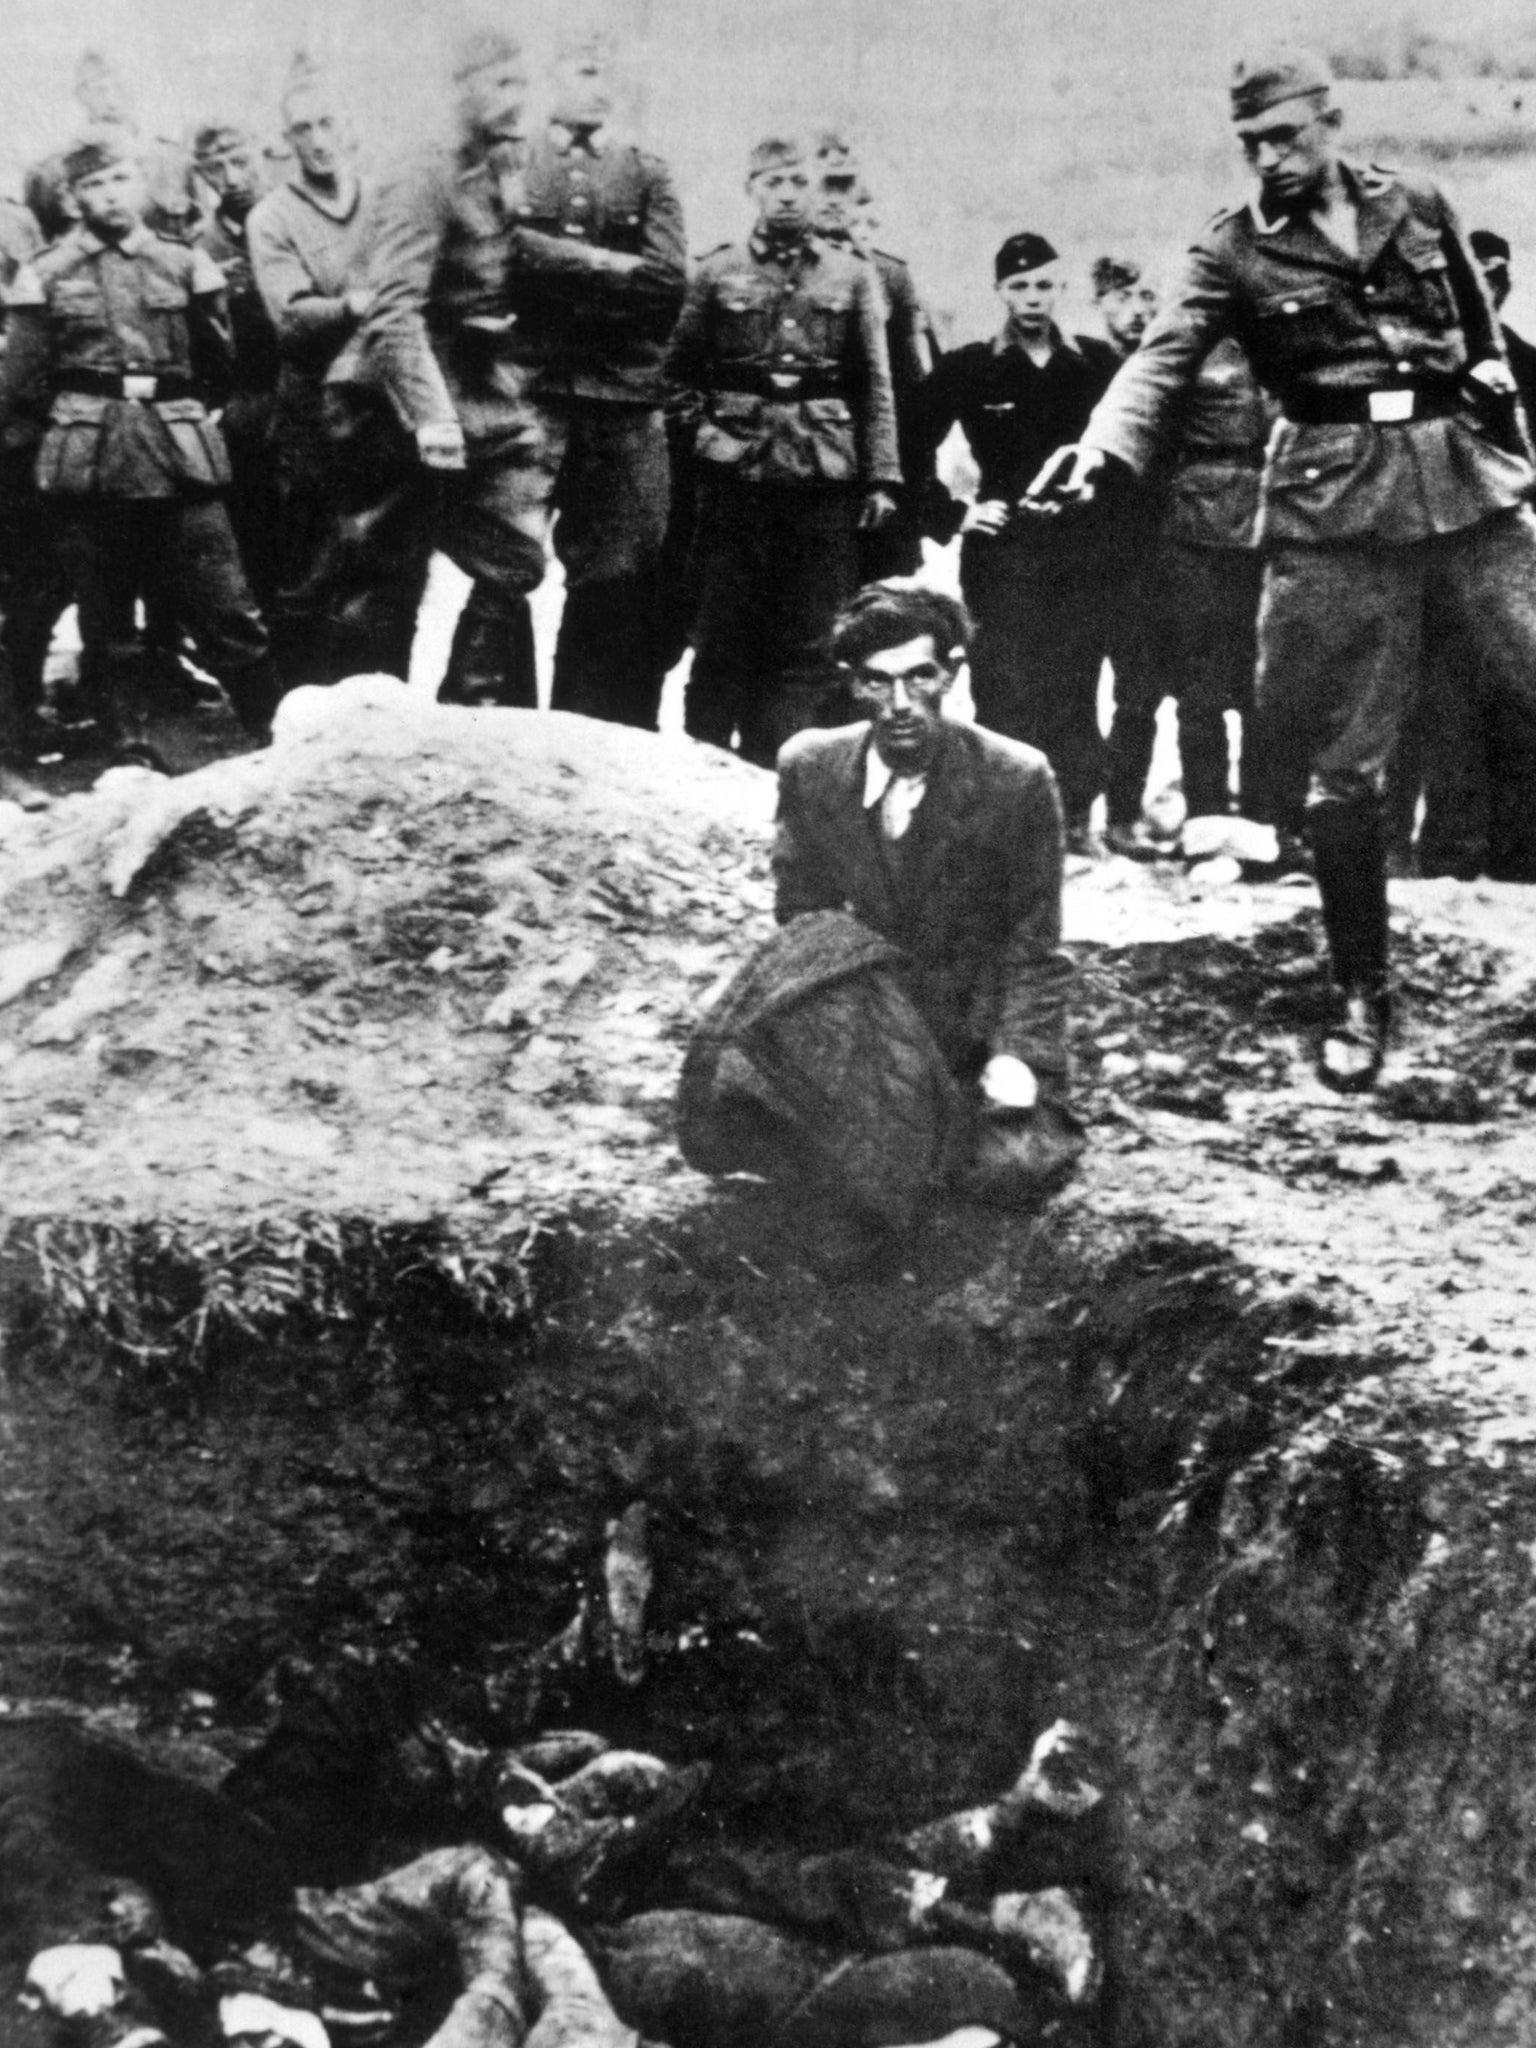 A German soldier executes Polish civilians in 1939